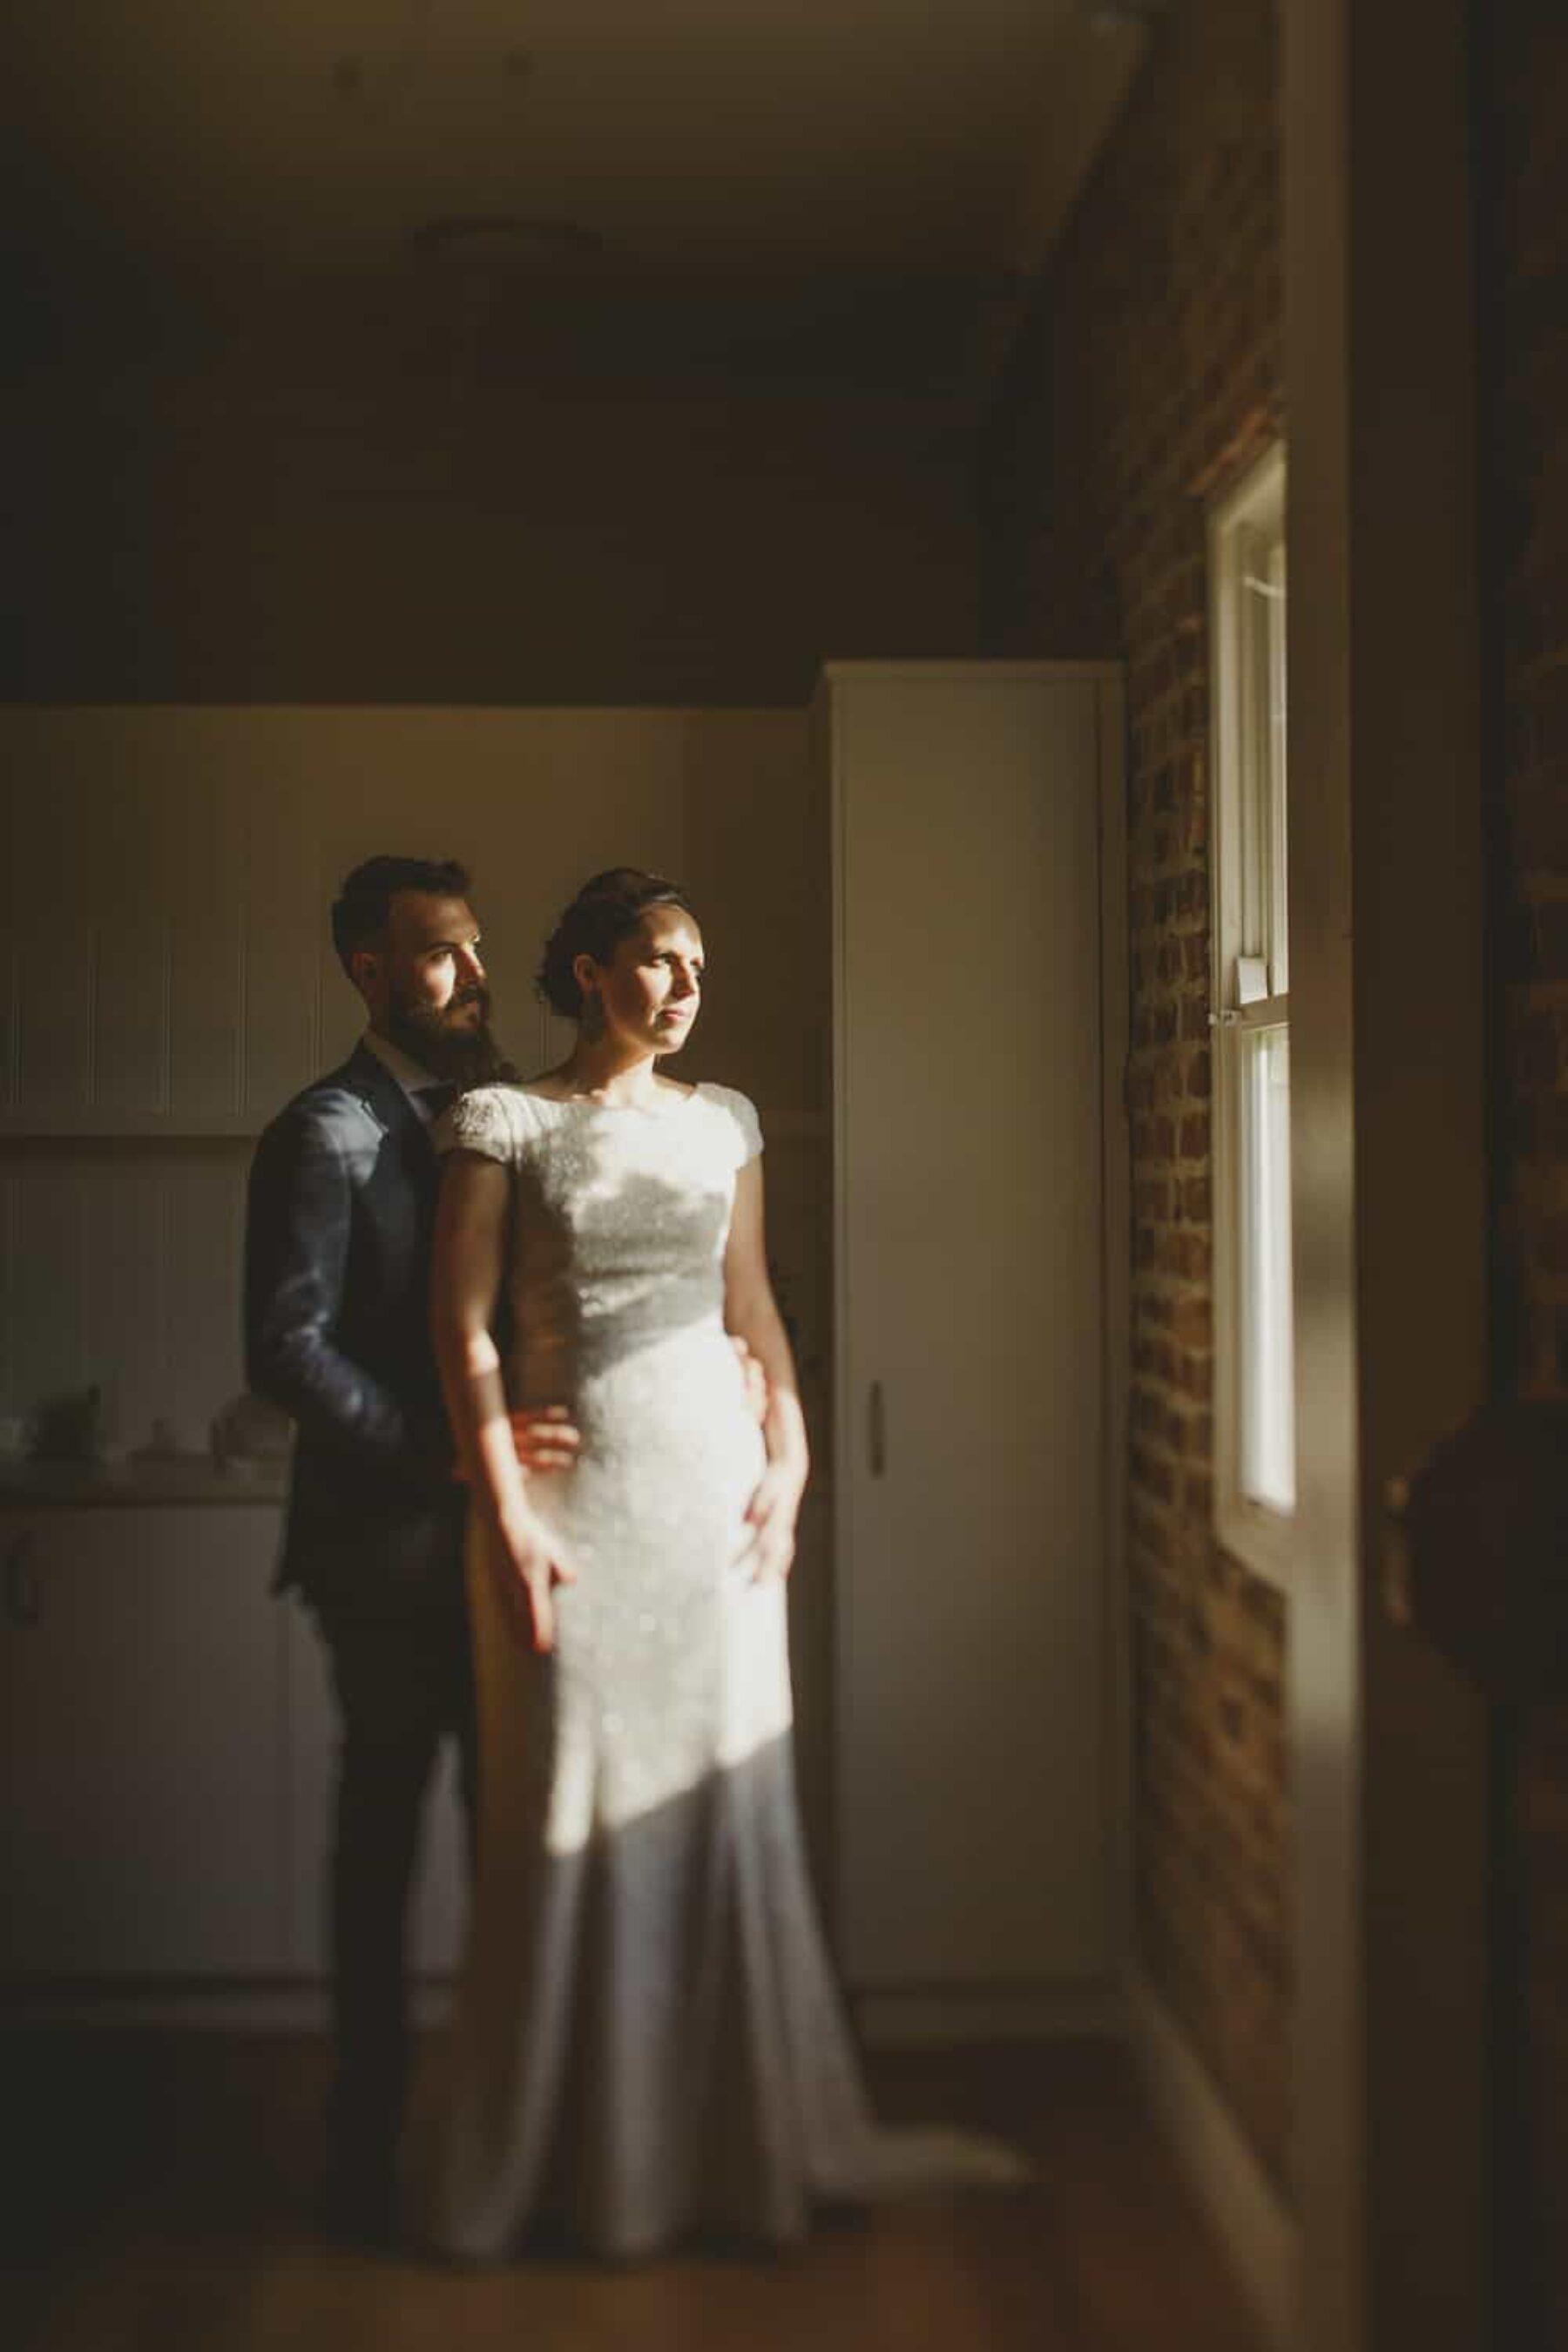 Montrose Berry Farm Wedding / Nina Claire Photography